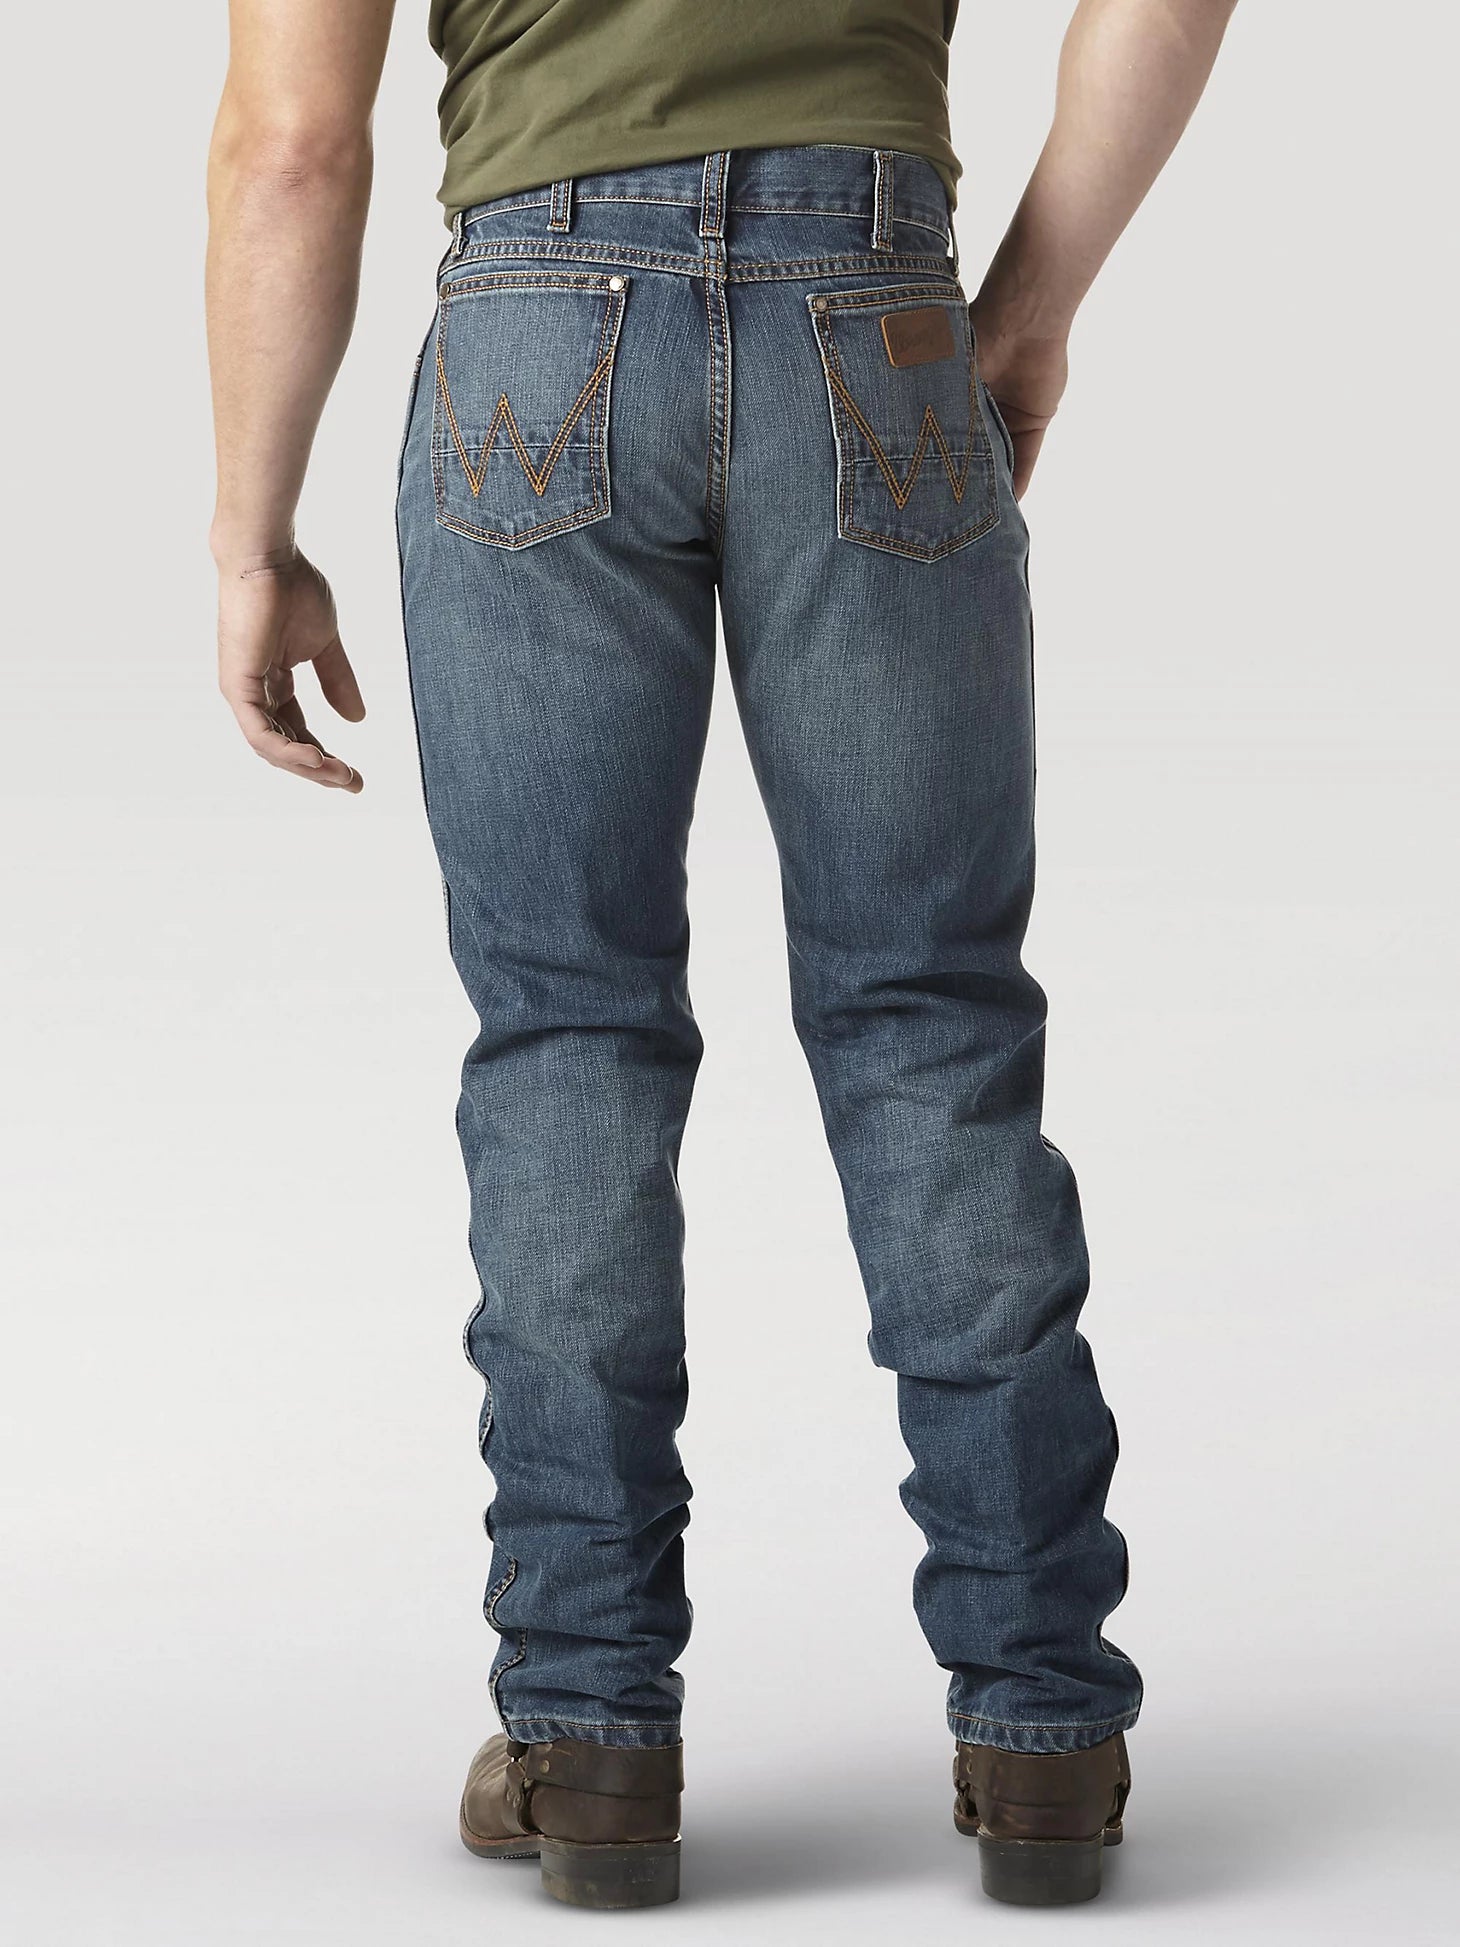 Jeans Wrangler Retro Slim Straight Rocky Top Caballero – Botas Chicho